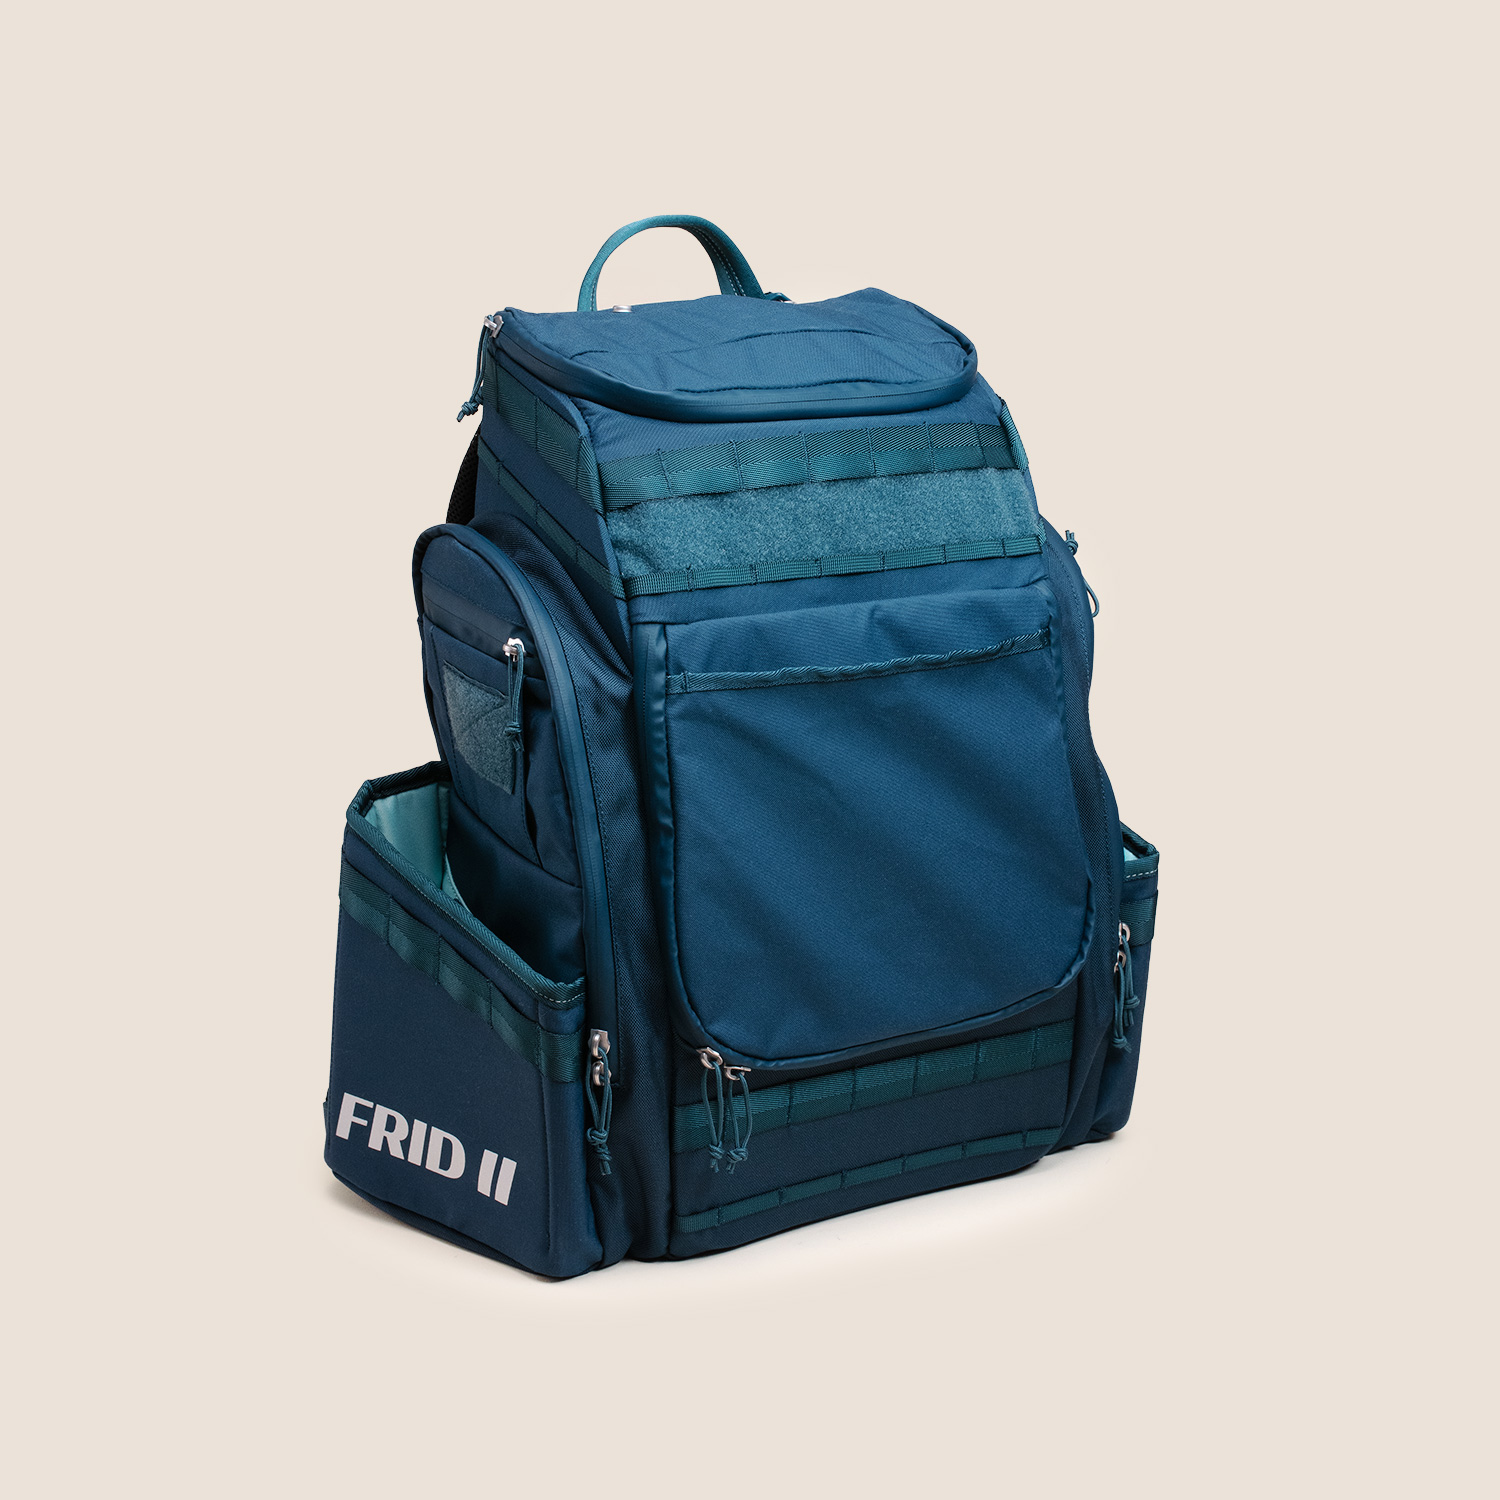 Case european Birdies grön ryggsäck backpack discgolfväska front